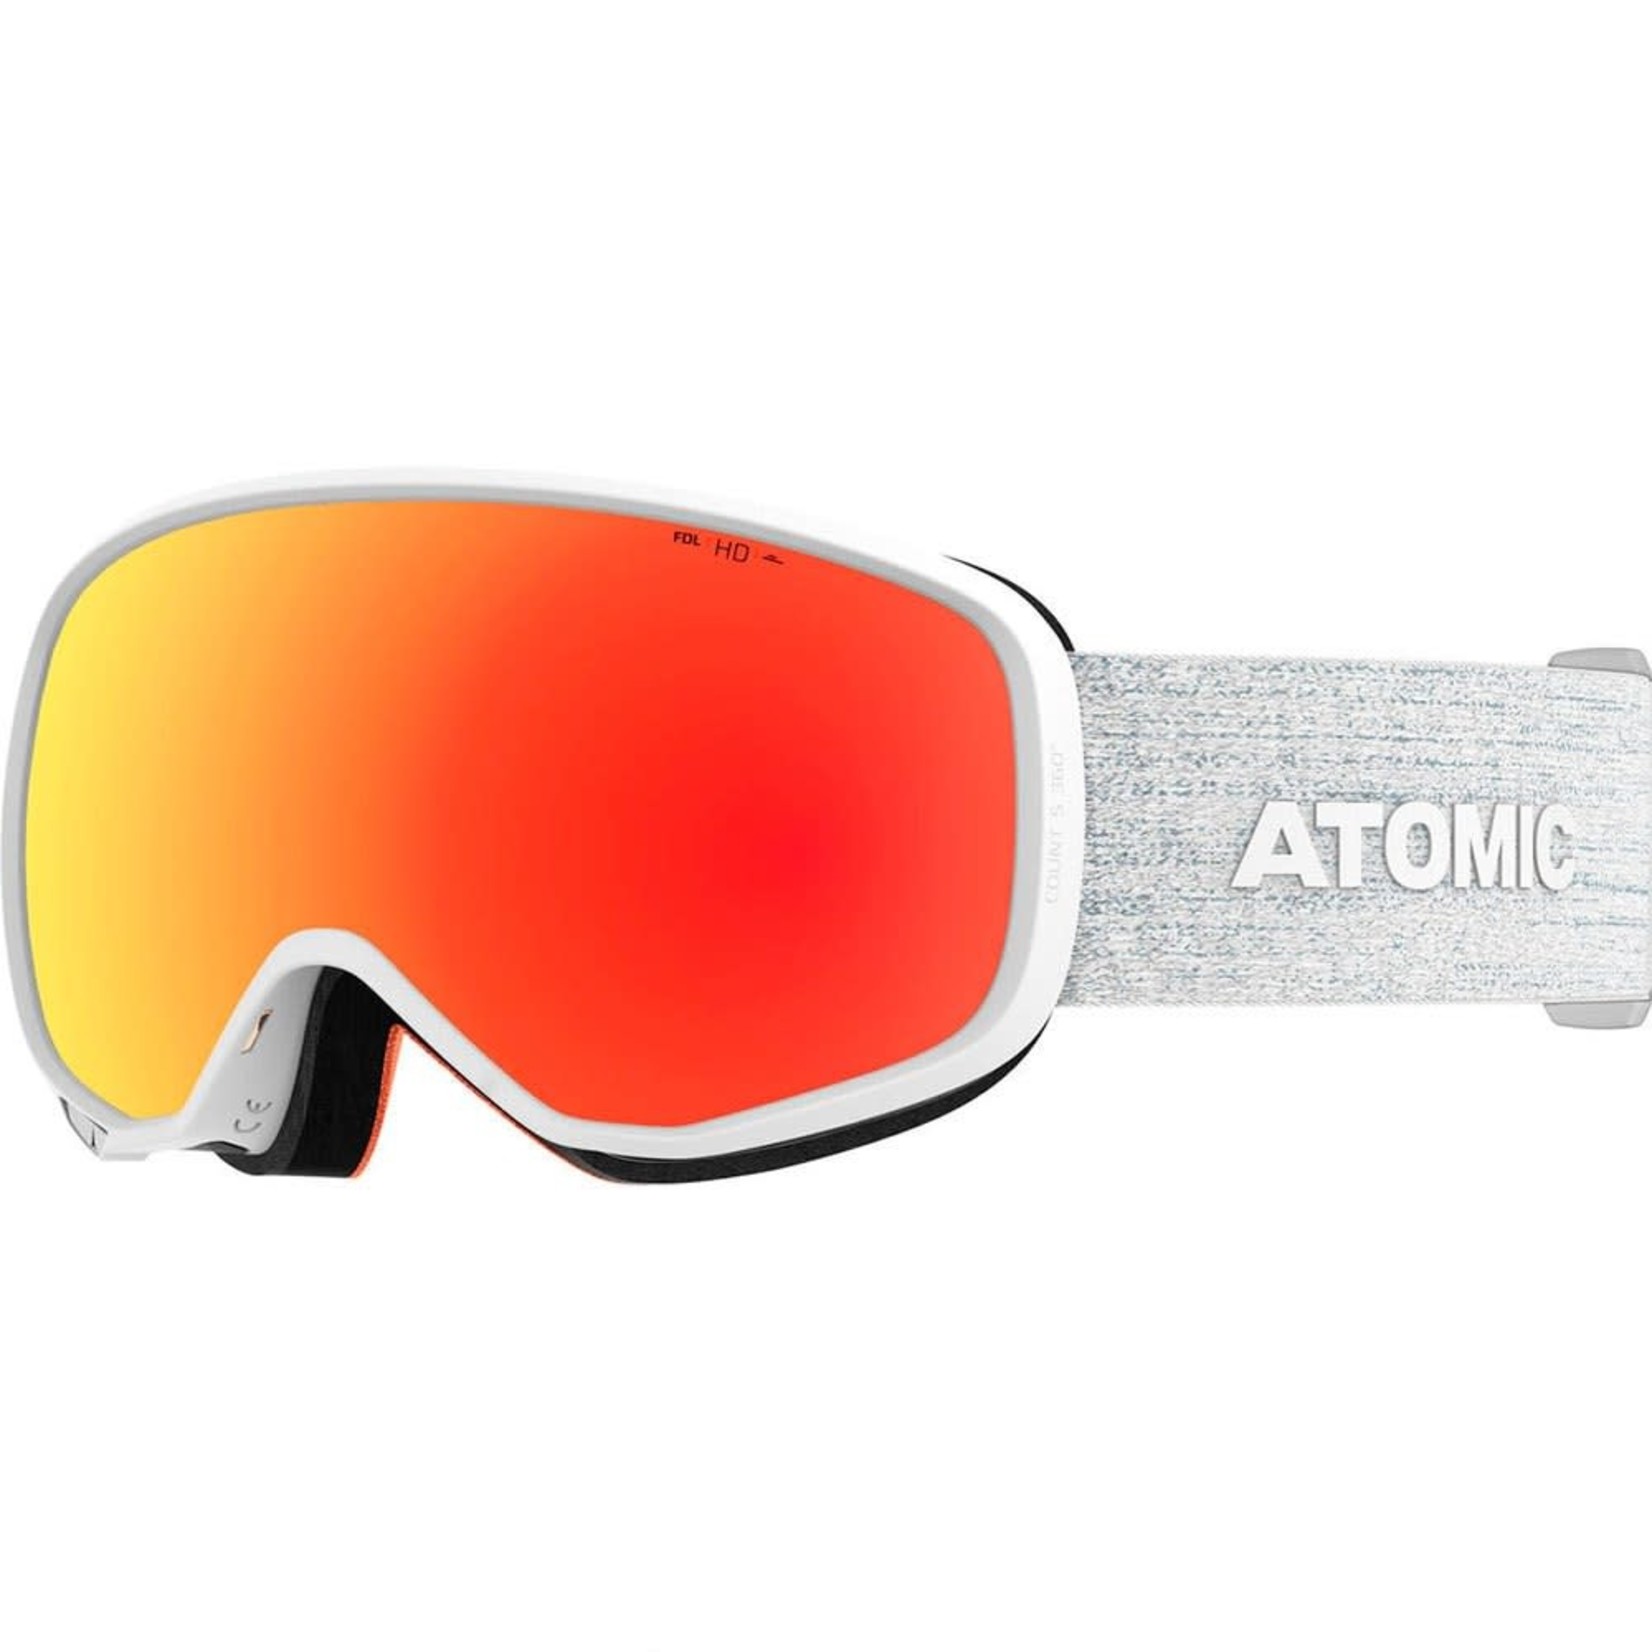 Atomic Lunette de ski Atomic Count S 360 - Unisexe